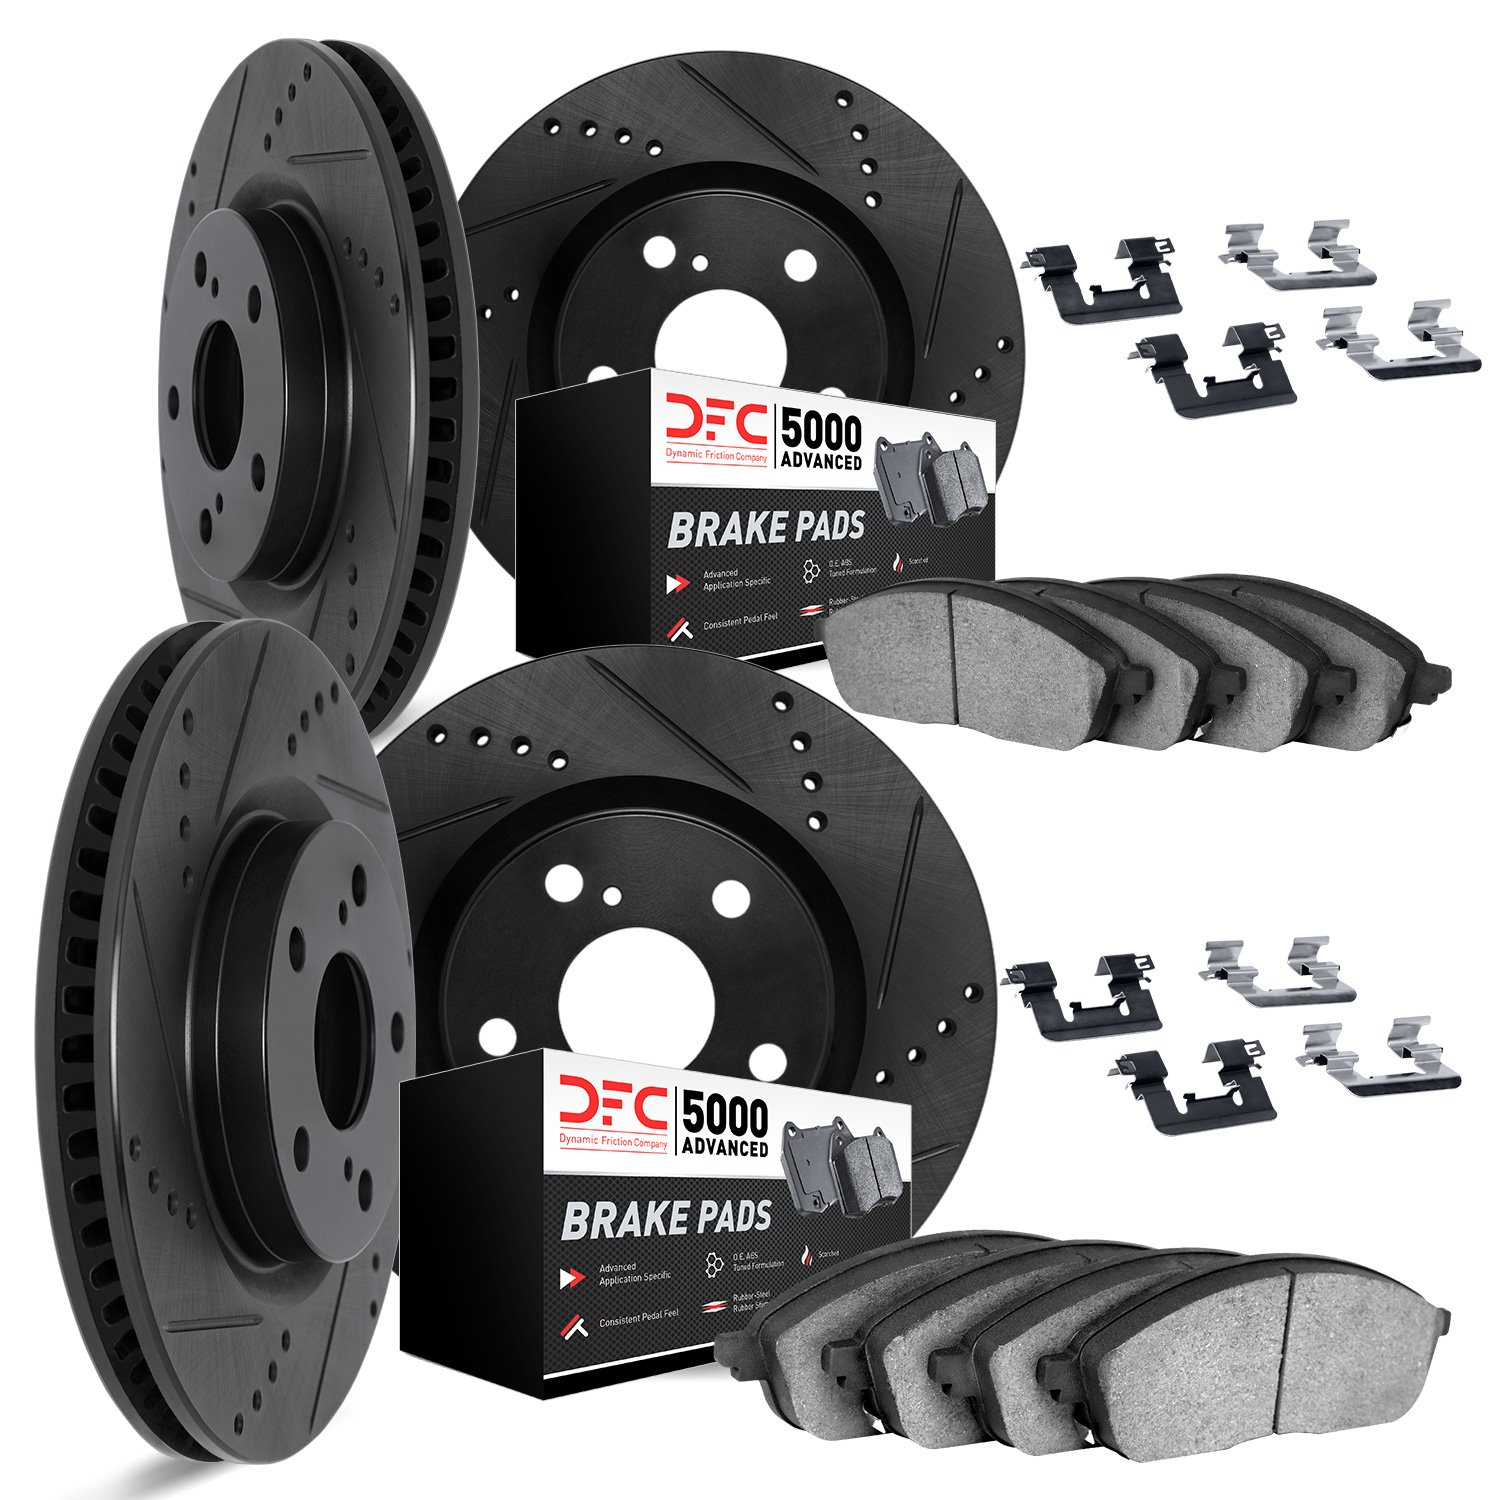 8514-39043 Drilled/Slotted Brake Rotors w/5000 Advanced Brake Pads Kit & Hardware [Black], 2006-2008 Mopar, Position: Front and